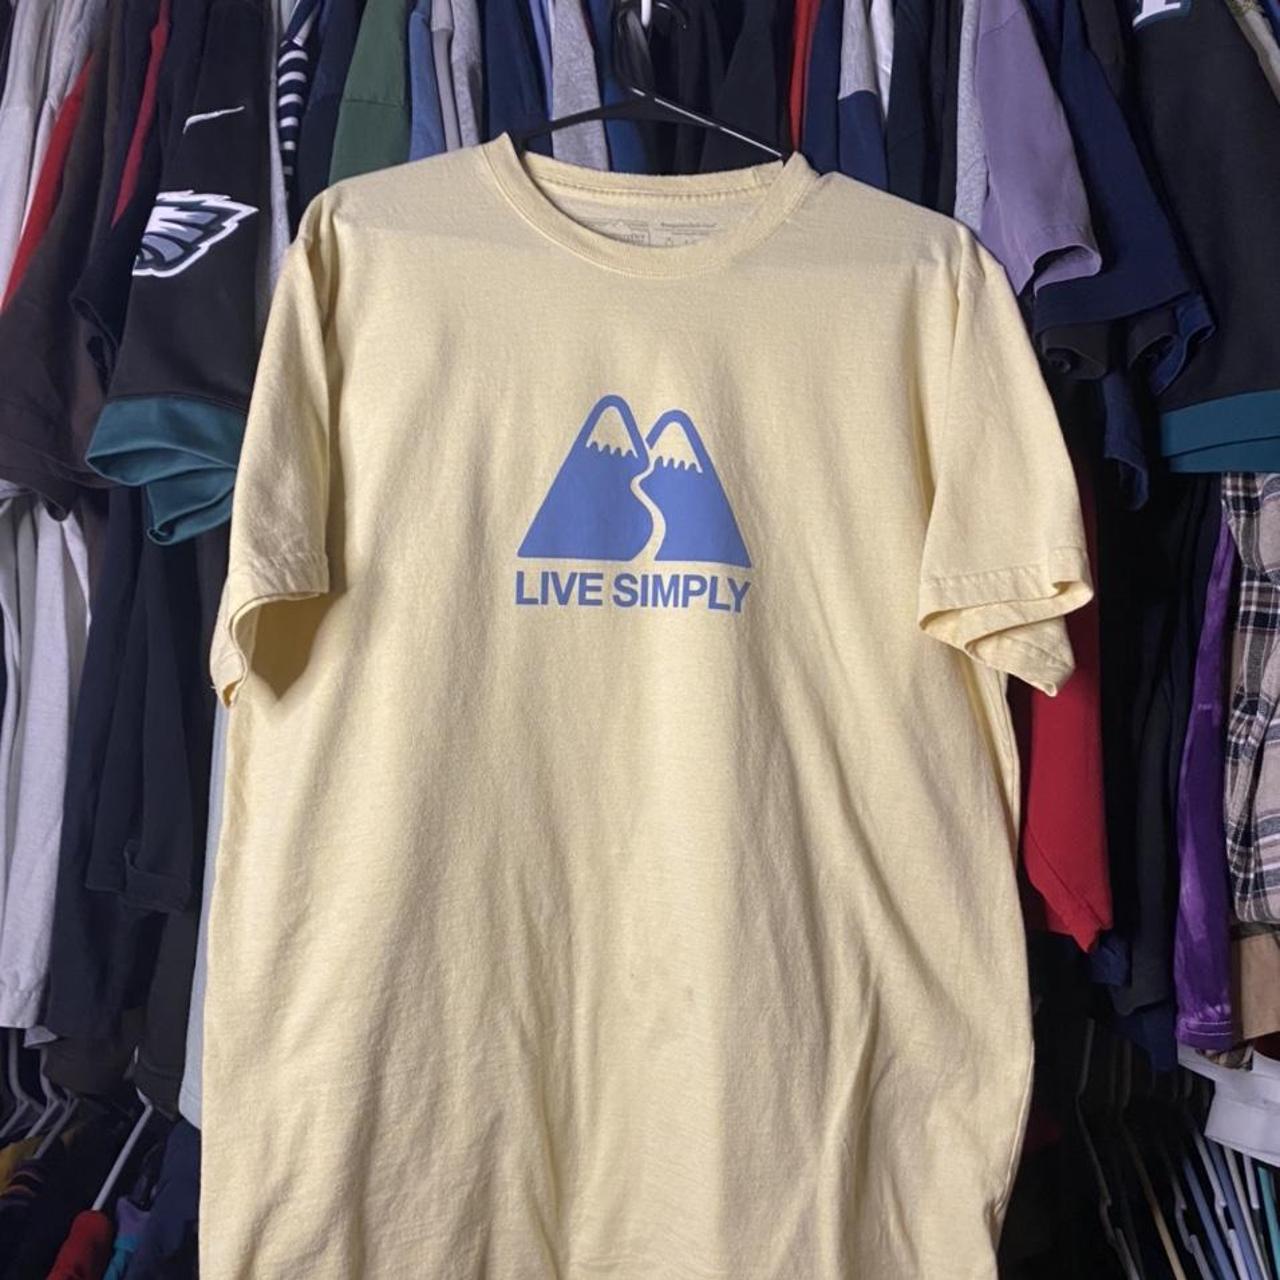 Patagonia Men's Cream and Blue T-shirt